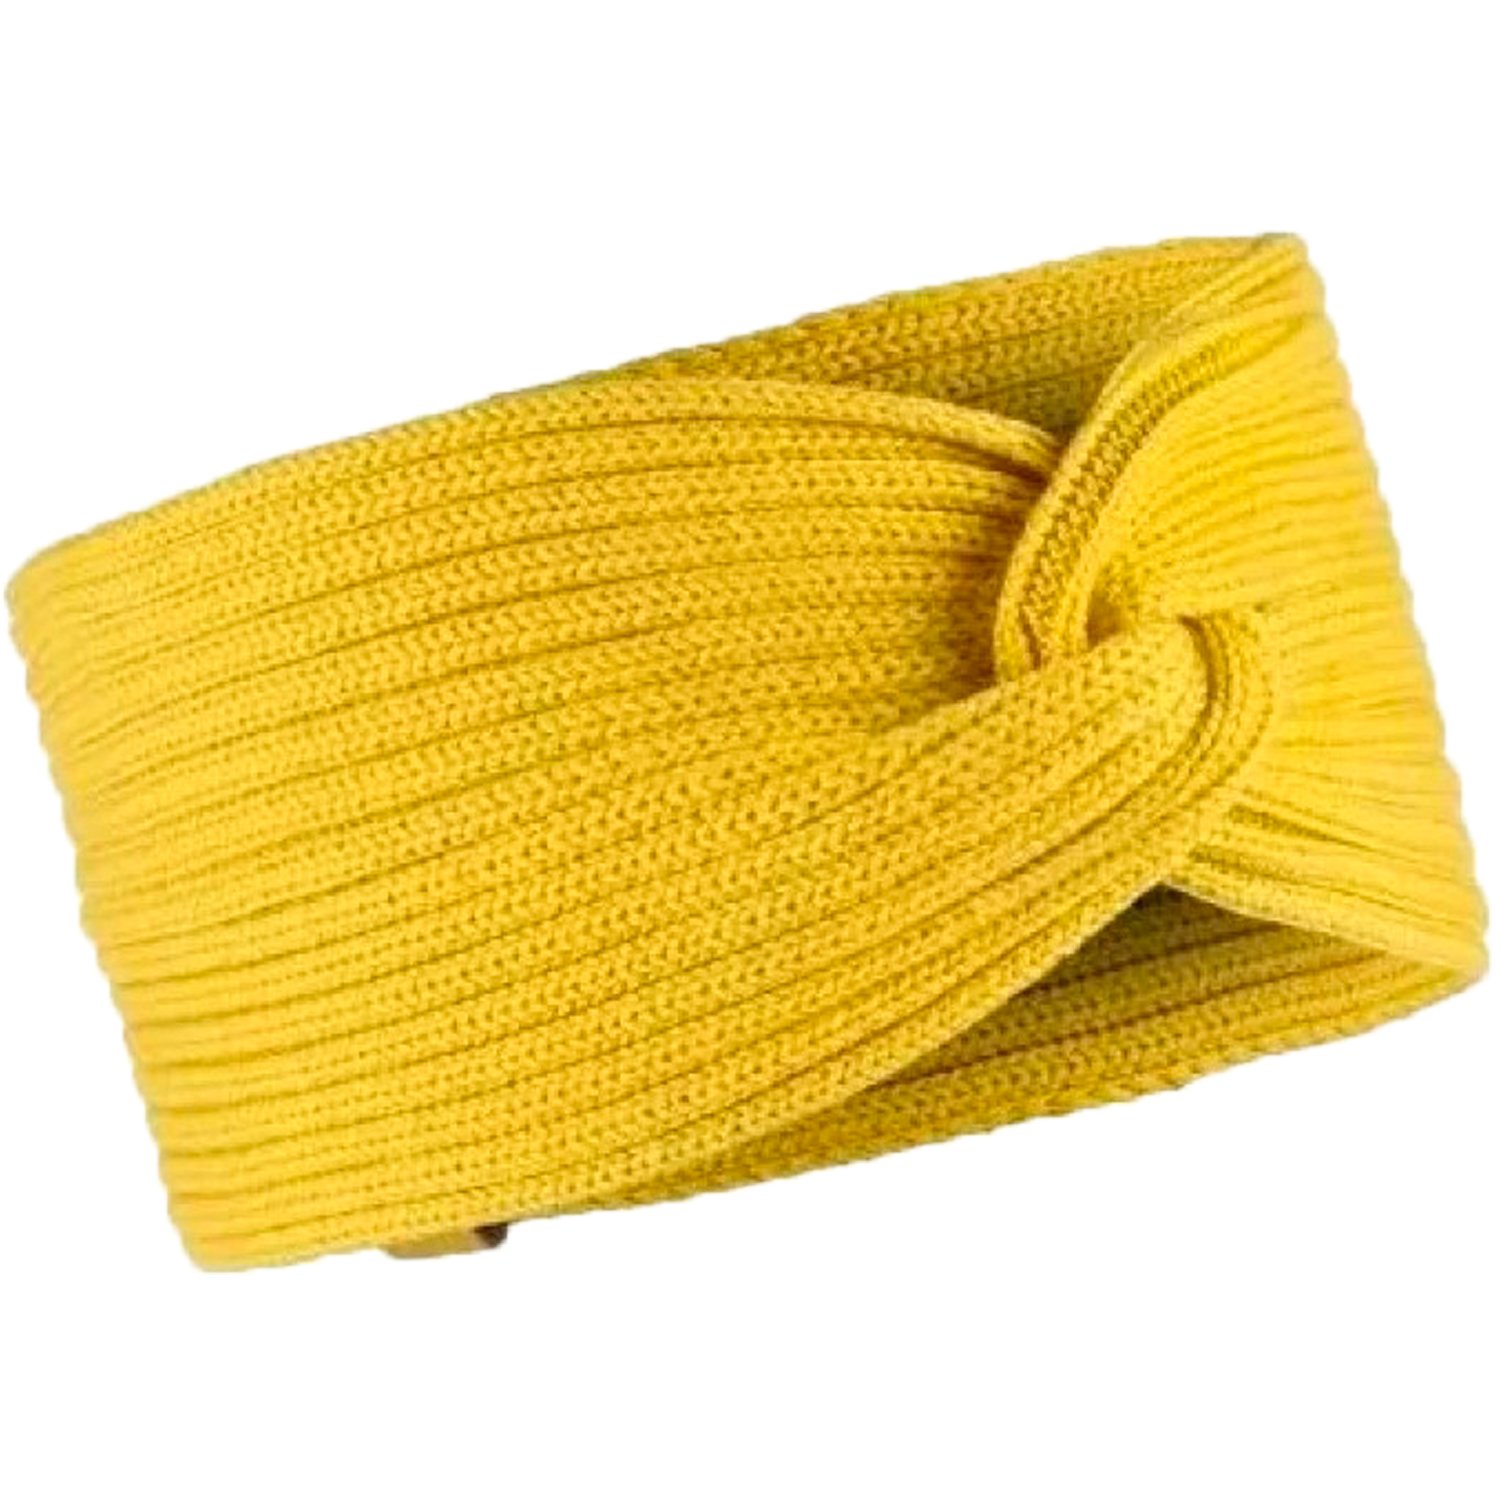 Повязка Buff Knitted Headband Norval Honey, женский, 126459.120.10.00 повязка buff knitted hat norval graphite серый 126459 901 10 00